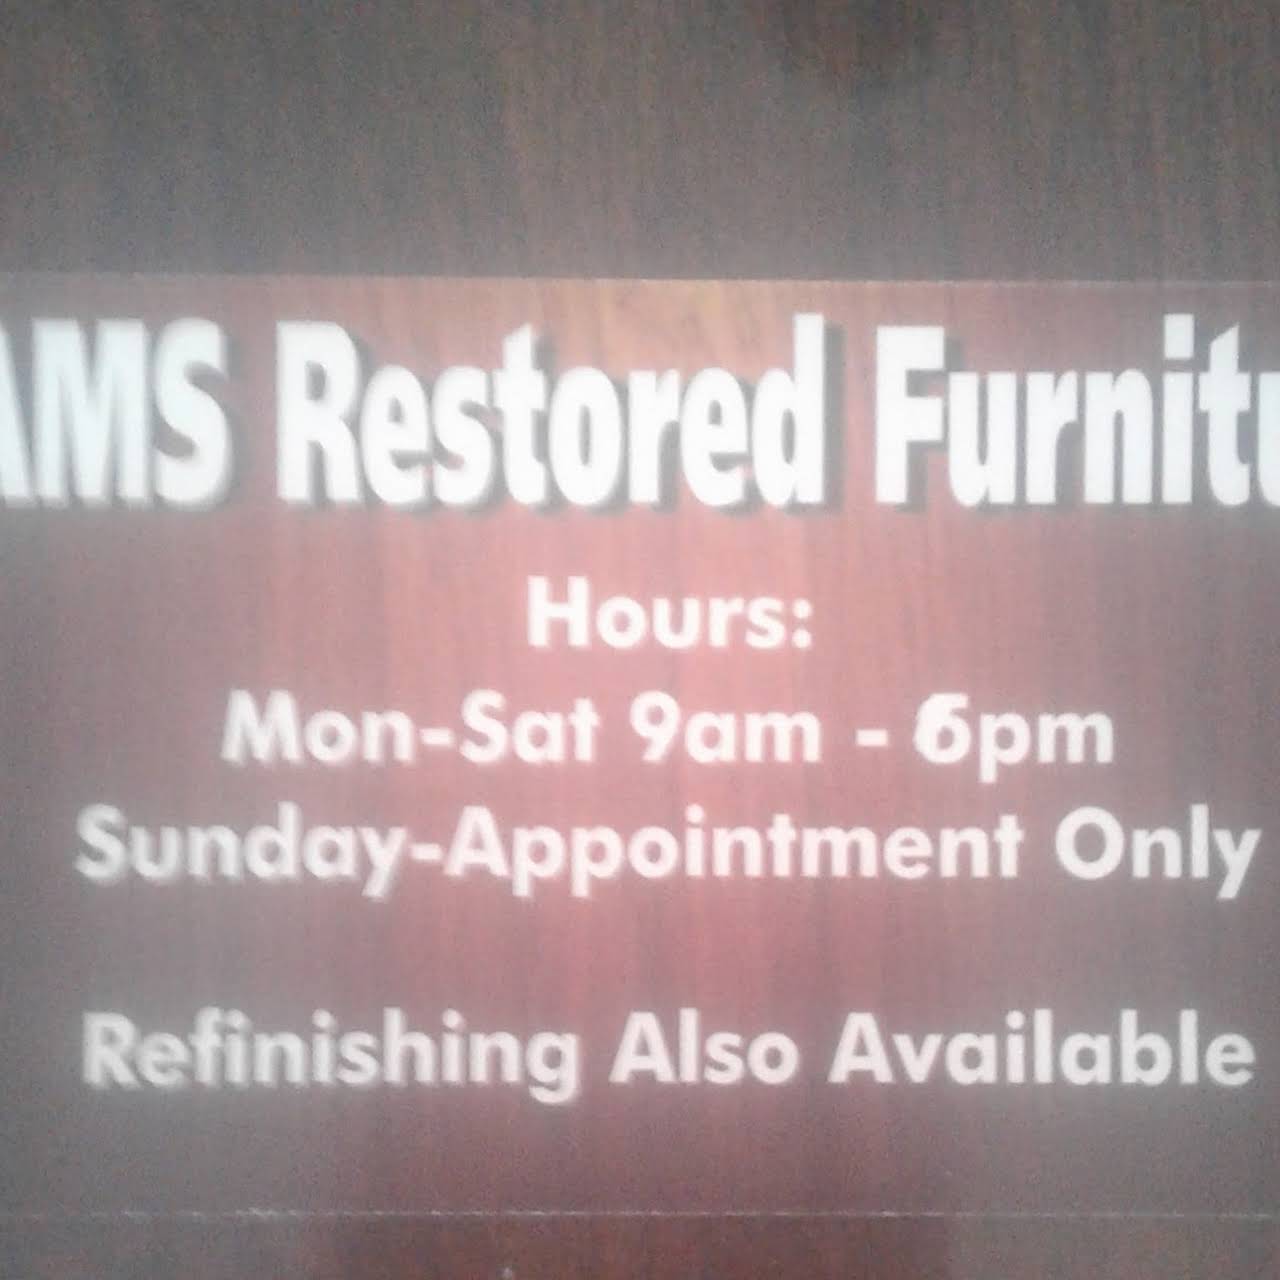 Jams Restored Furniture Furniture Store In Rockford